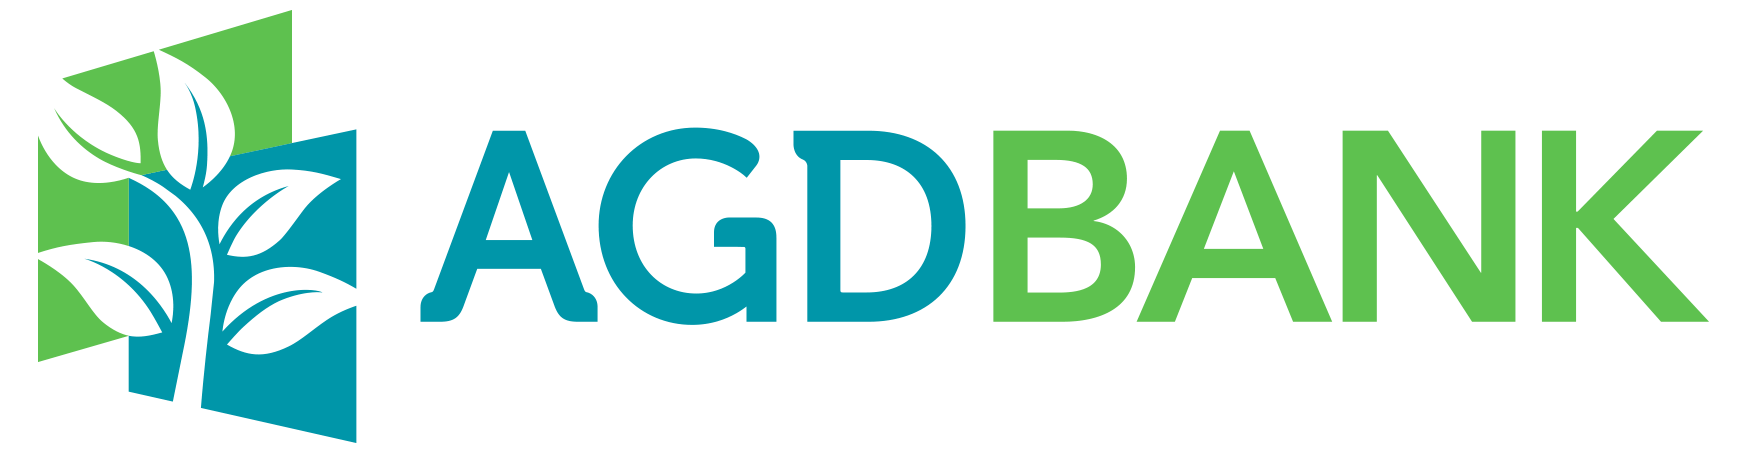 Green Bank Logo - FocusCore finds synergy with Asia Green Development Bank. FocusCore